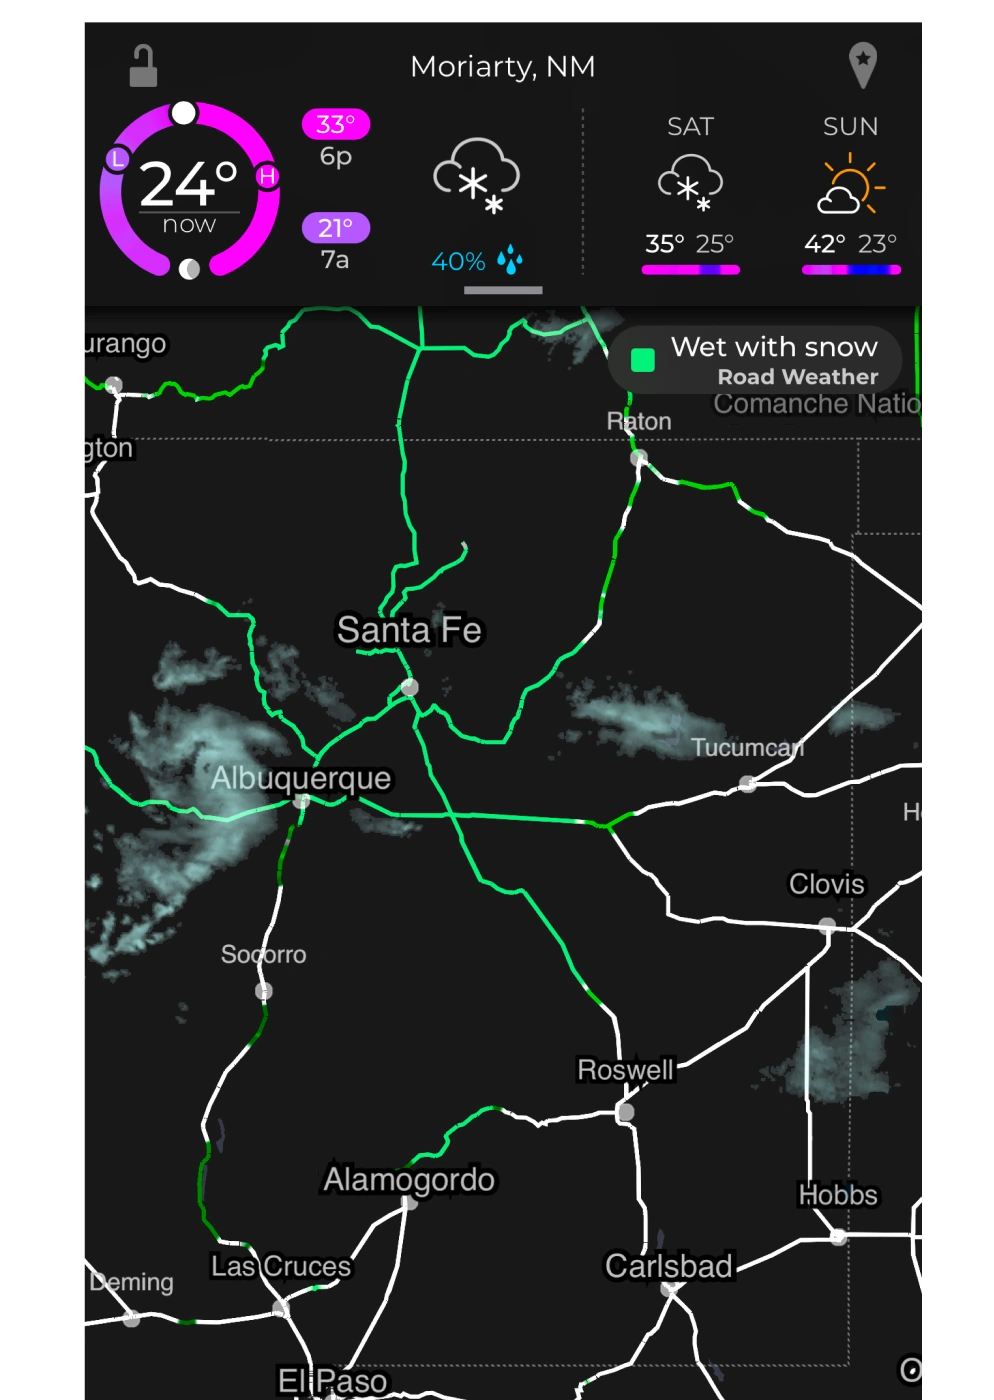 Screenshot of the MyRadar app showing road weather